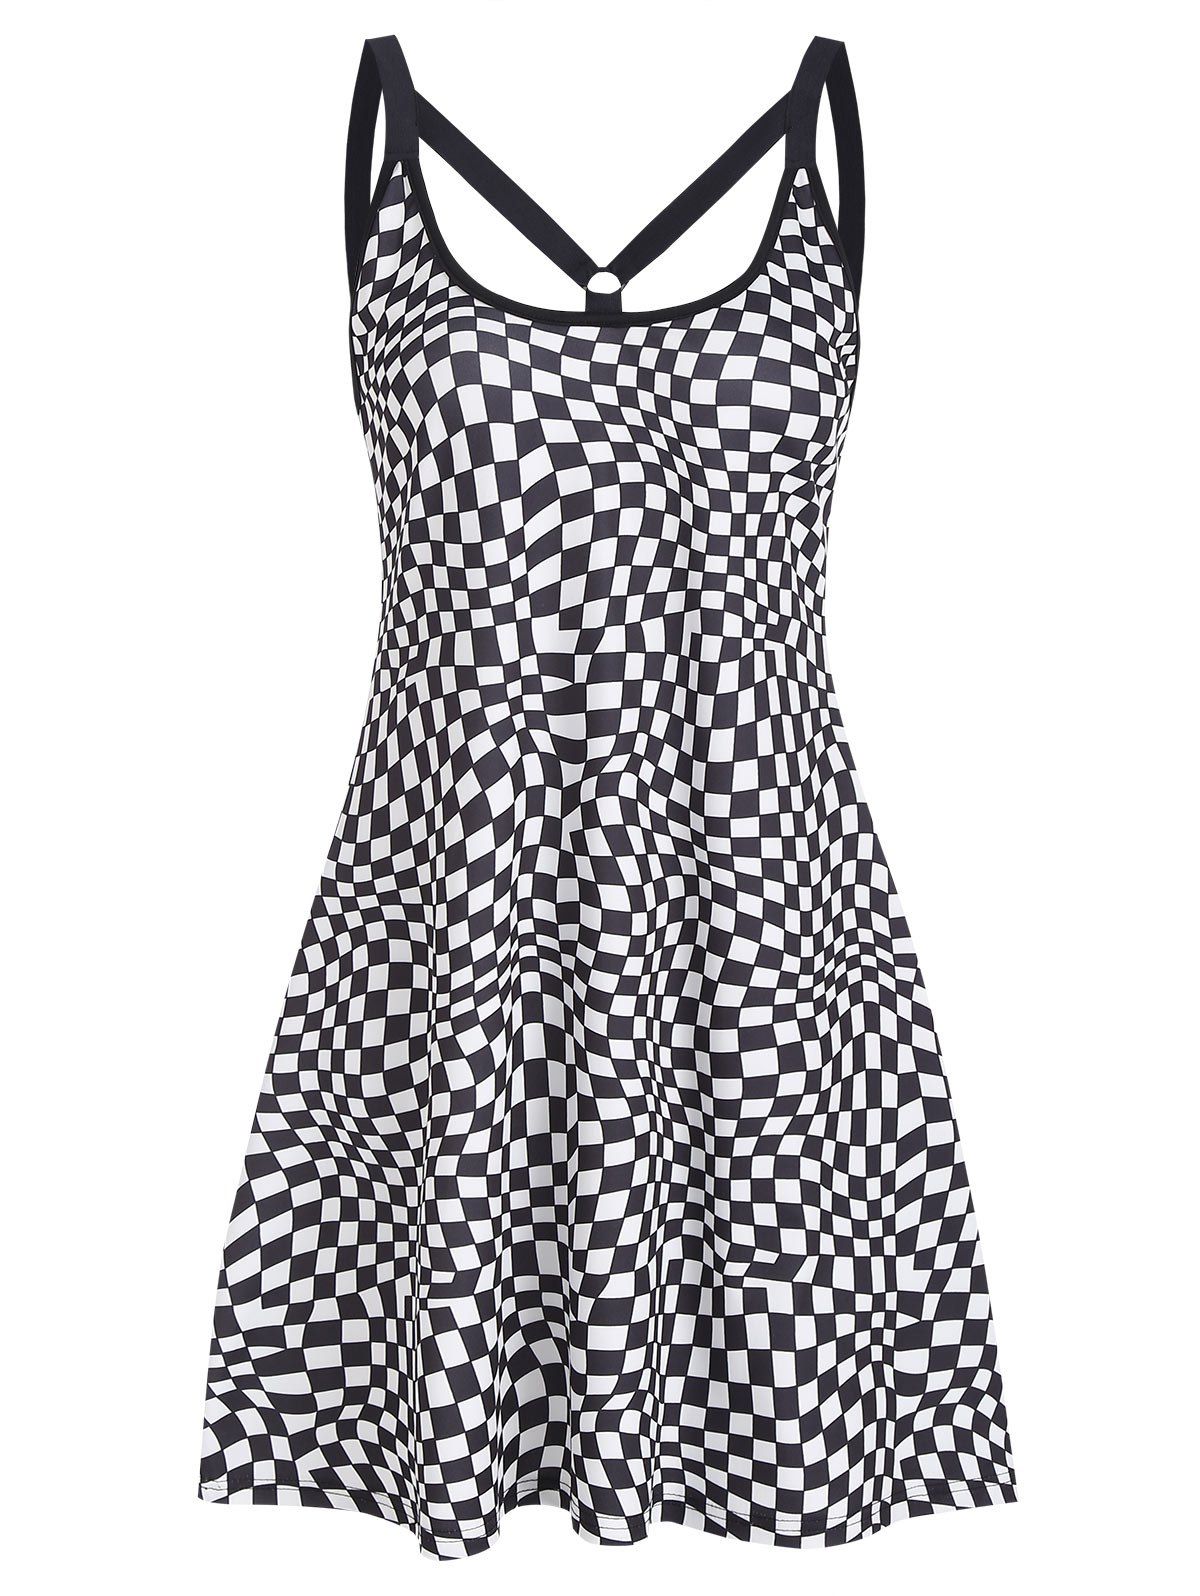 O Ring Strappy Checkerboard Print Tank Dress - BLACK M